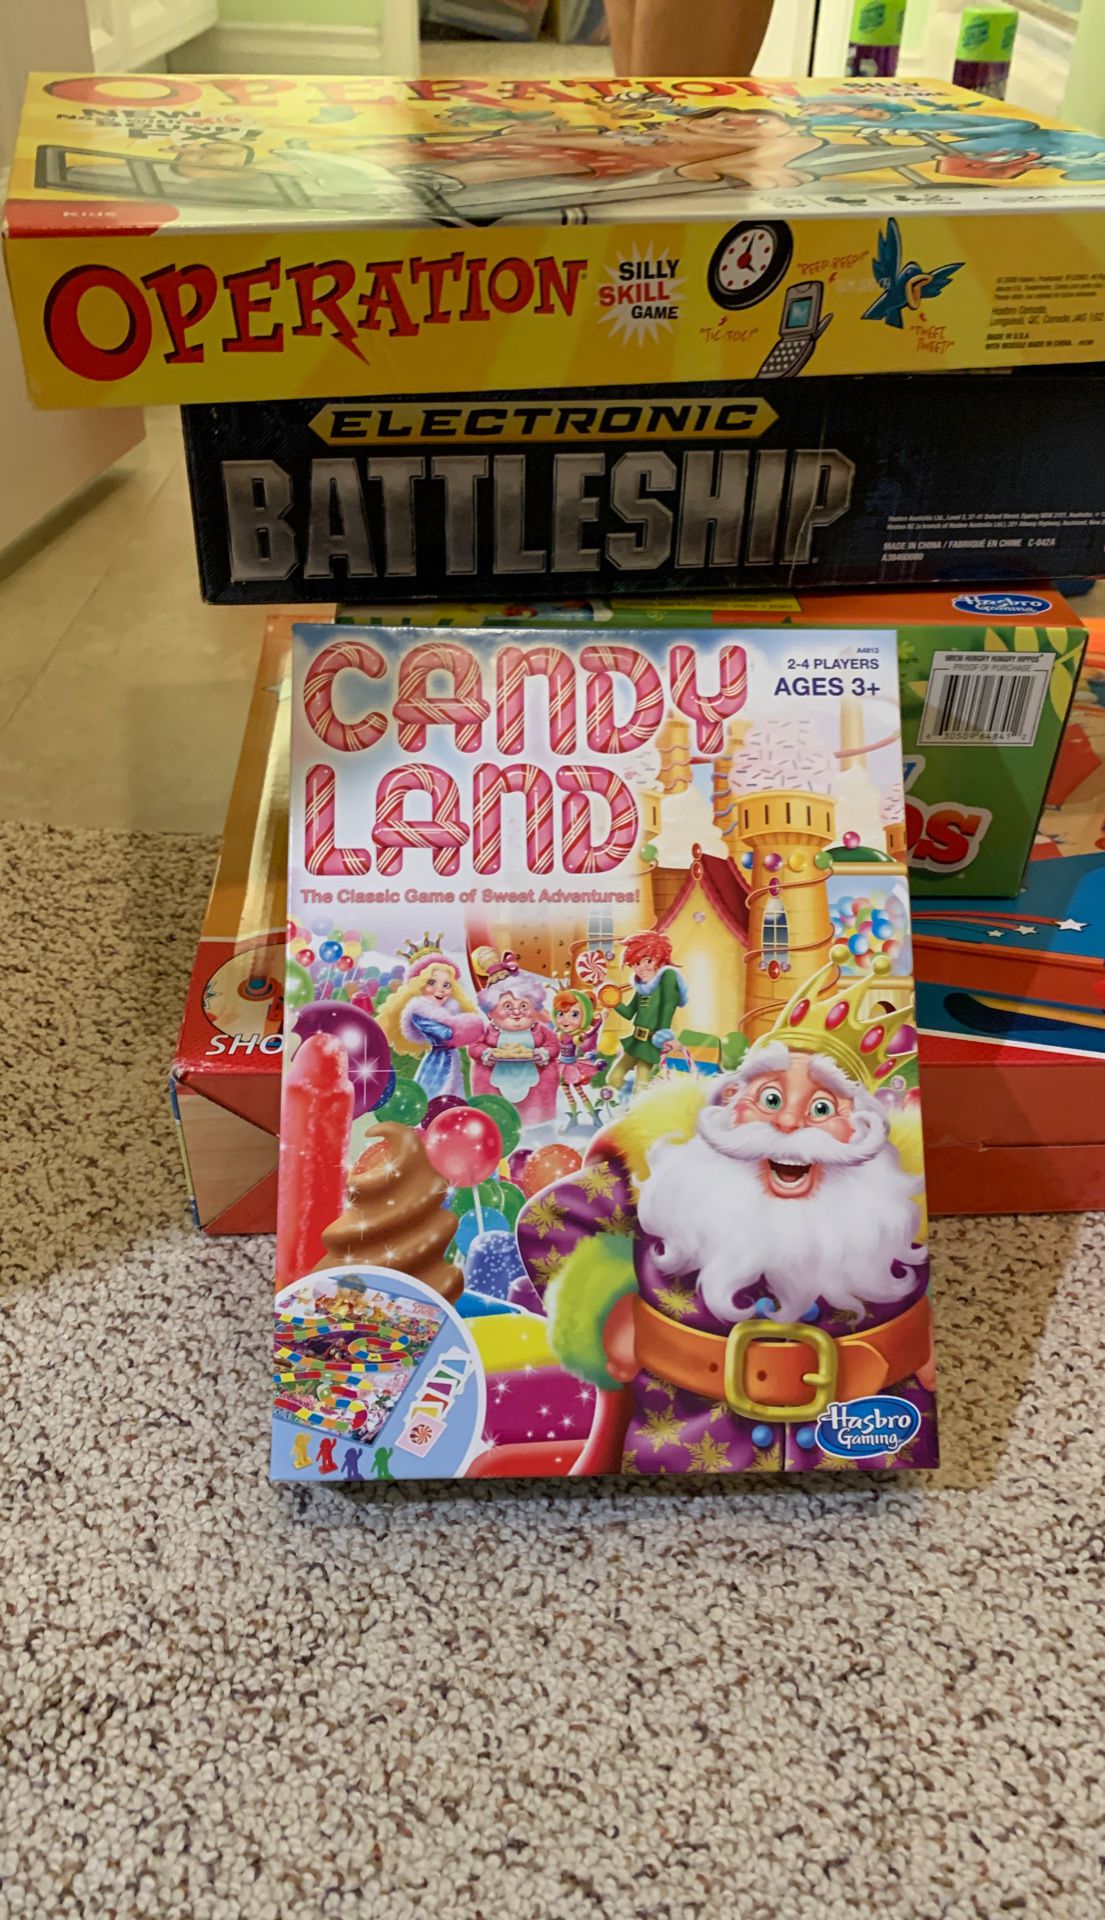 Candy land